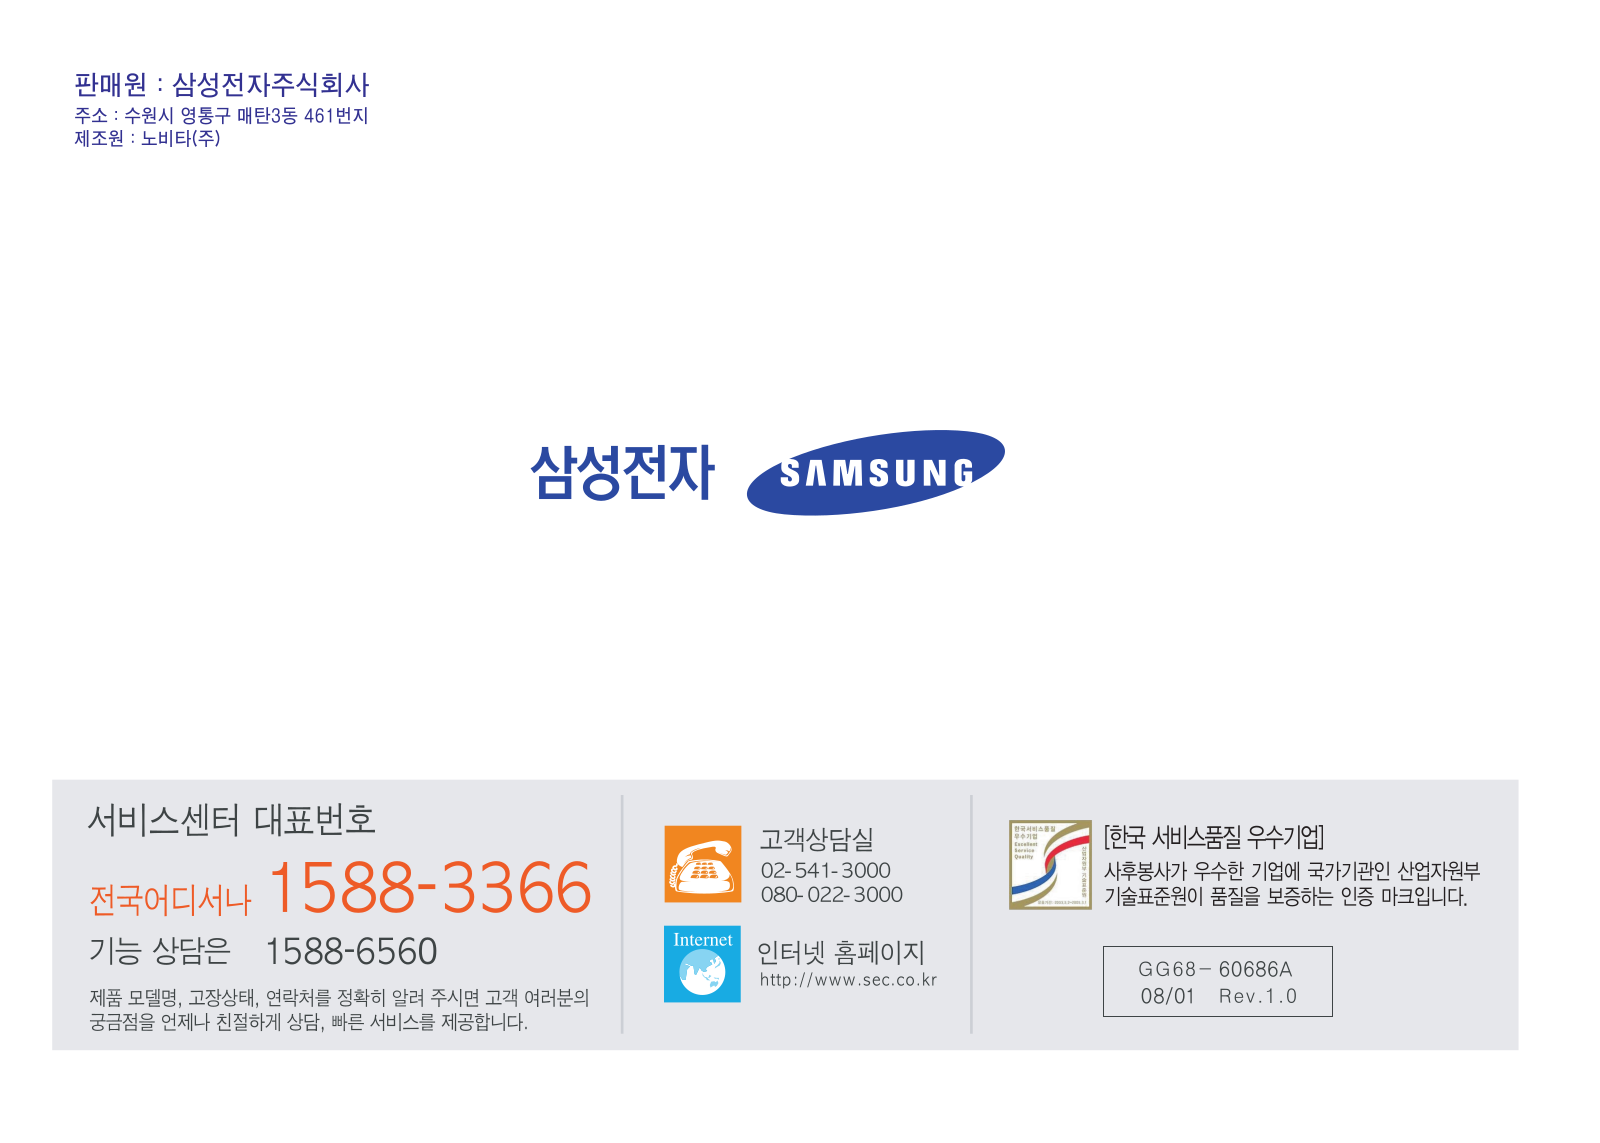 Samsung SP-D781BR, SP-D782BK, SP-D780RD, SP-D780BK, SP-D782WH Manual